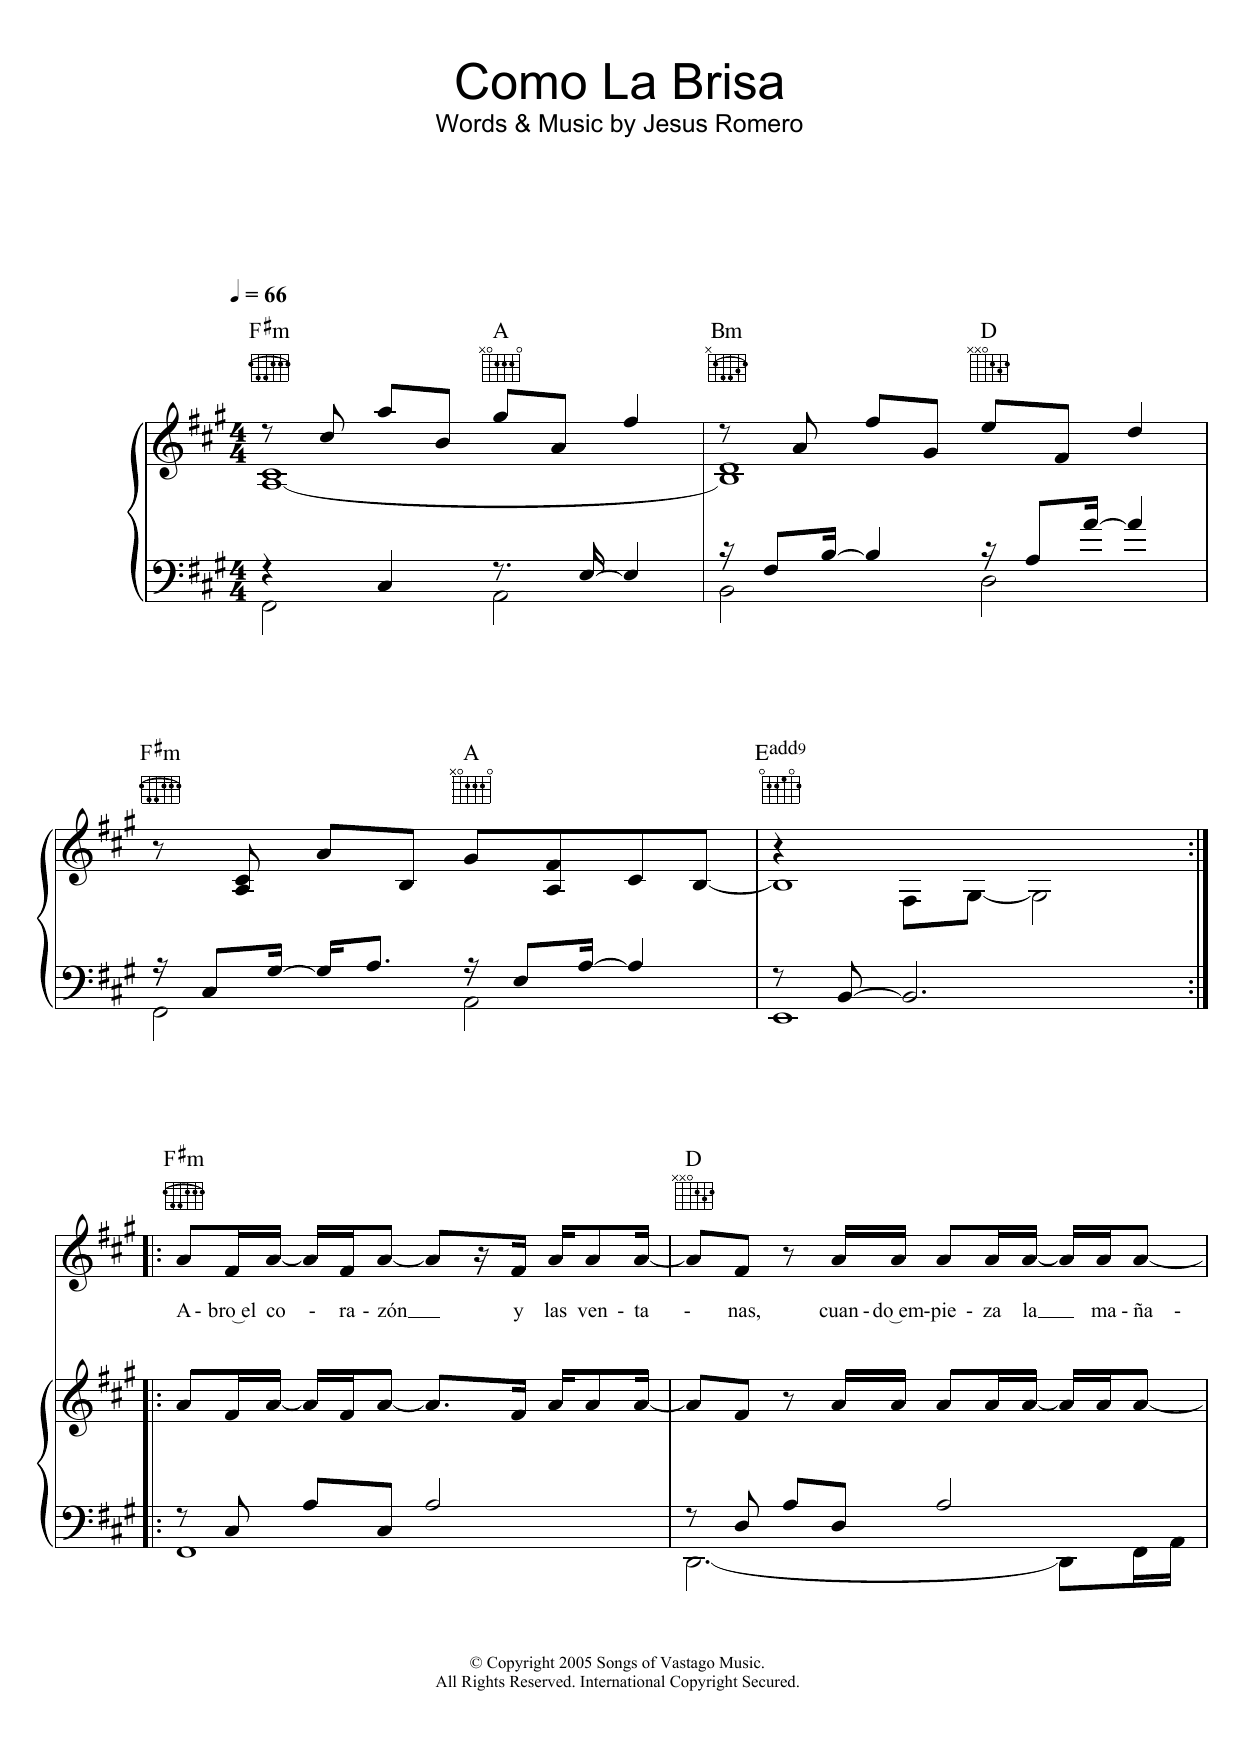 Jesus Adrian Romero Como La Brisa Sheet Music Notes & Chords for Piano, Vocal & Guitar (Right-Hand Melody) - Download or Print PDF